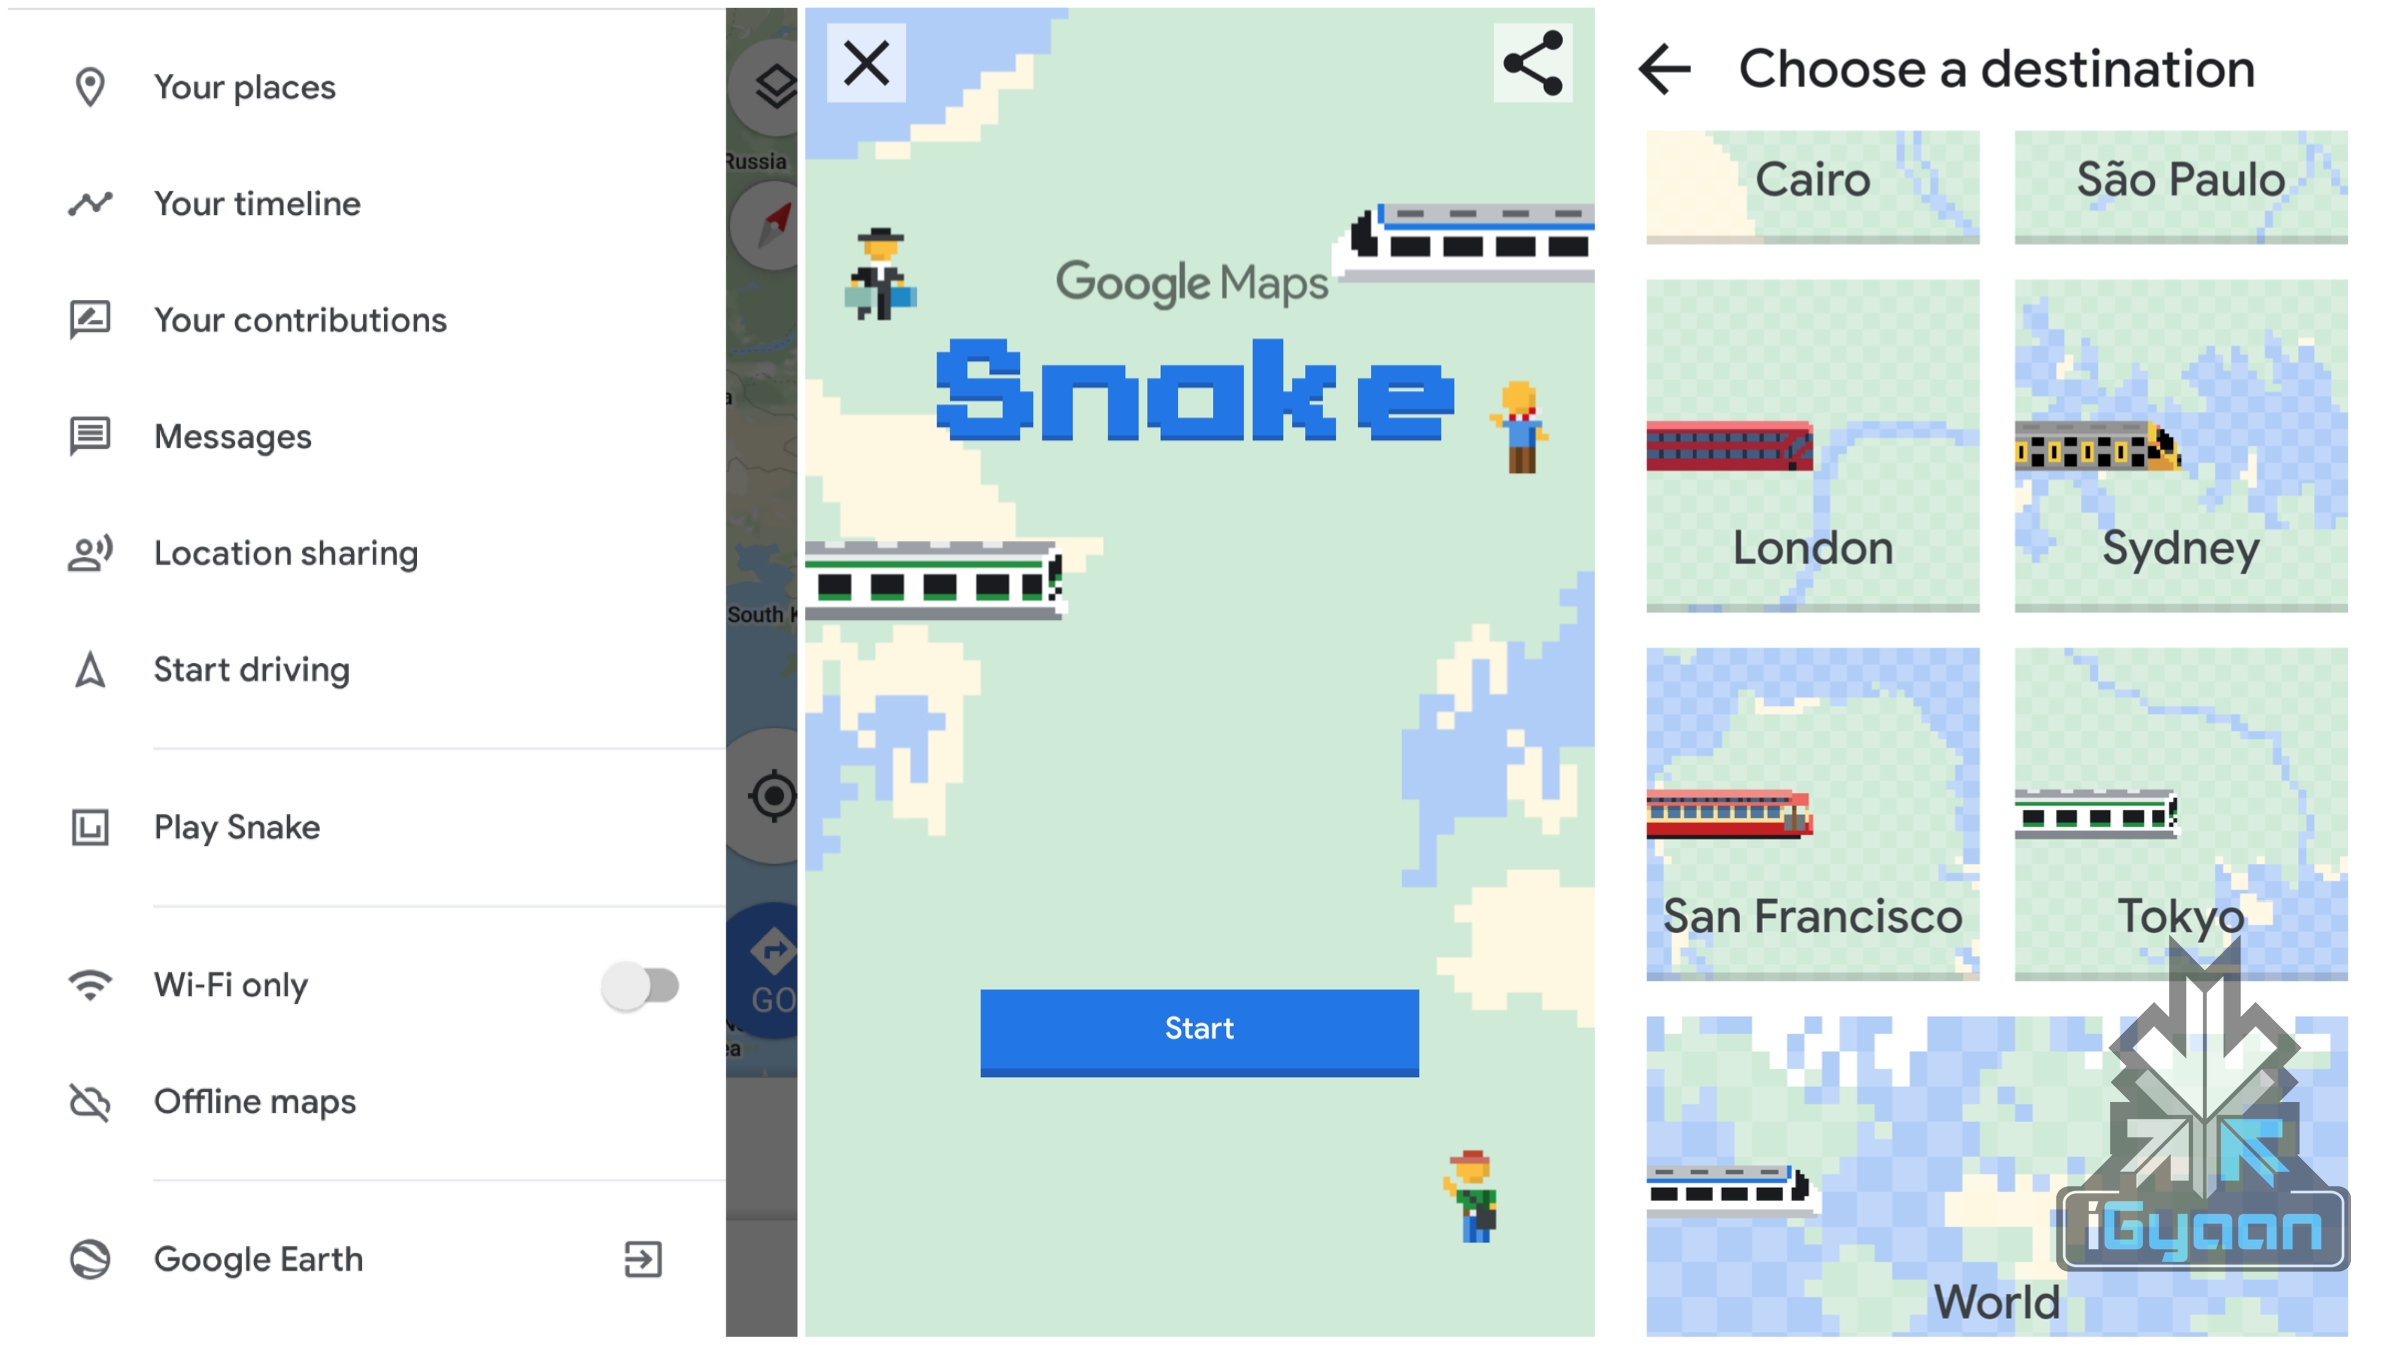 Google Maps Creates New Snake Game